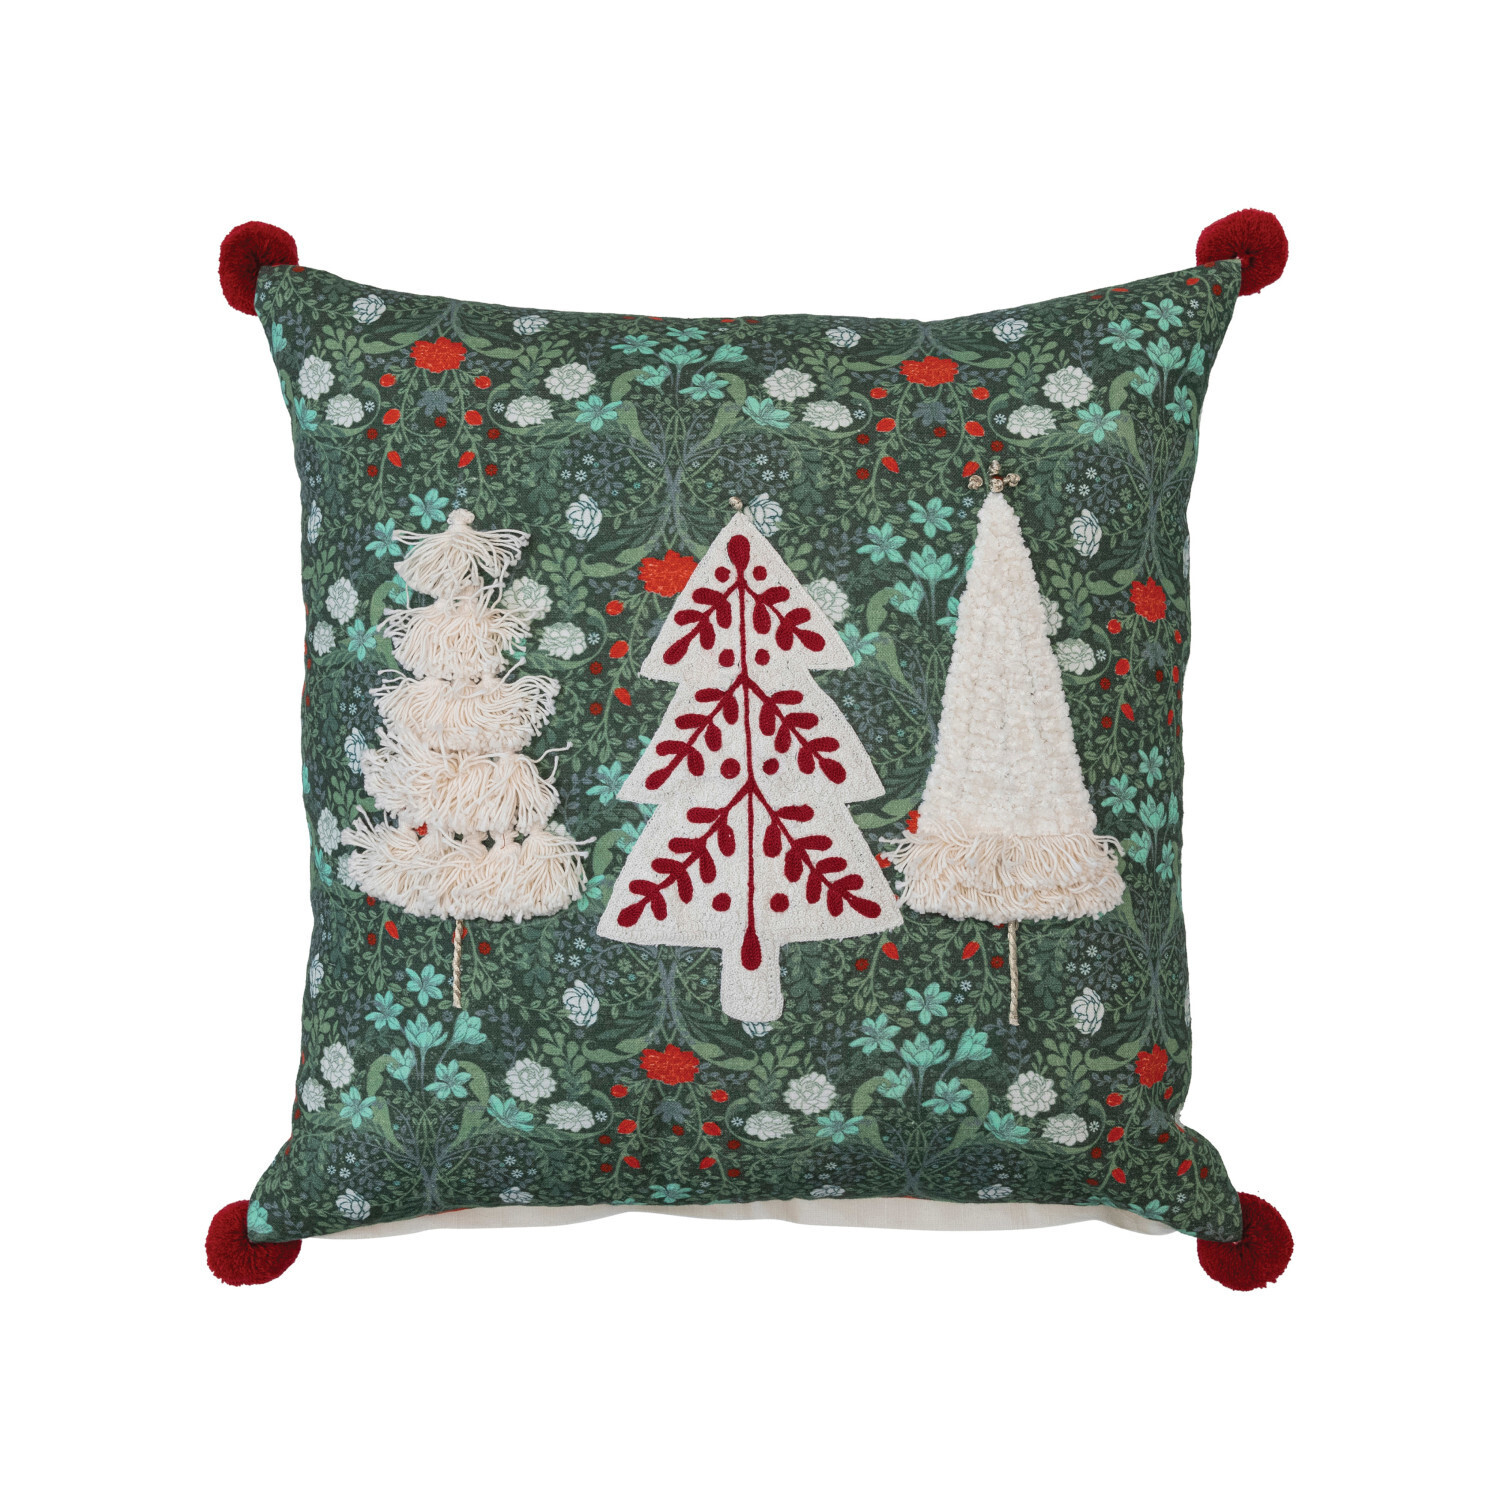 18" Pillow w/ Trees, Applique, Embroidery & Pom Pom Tassels